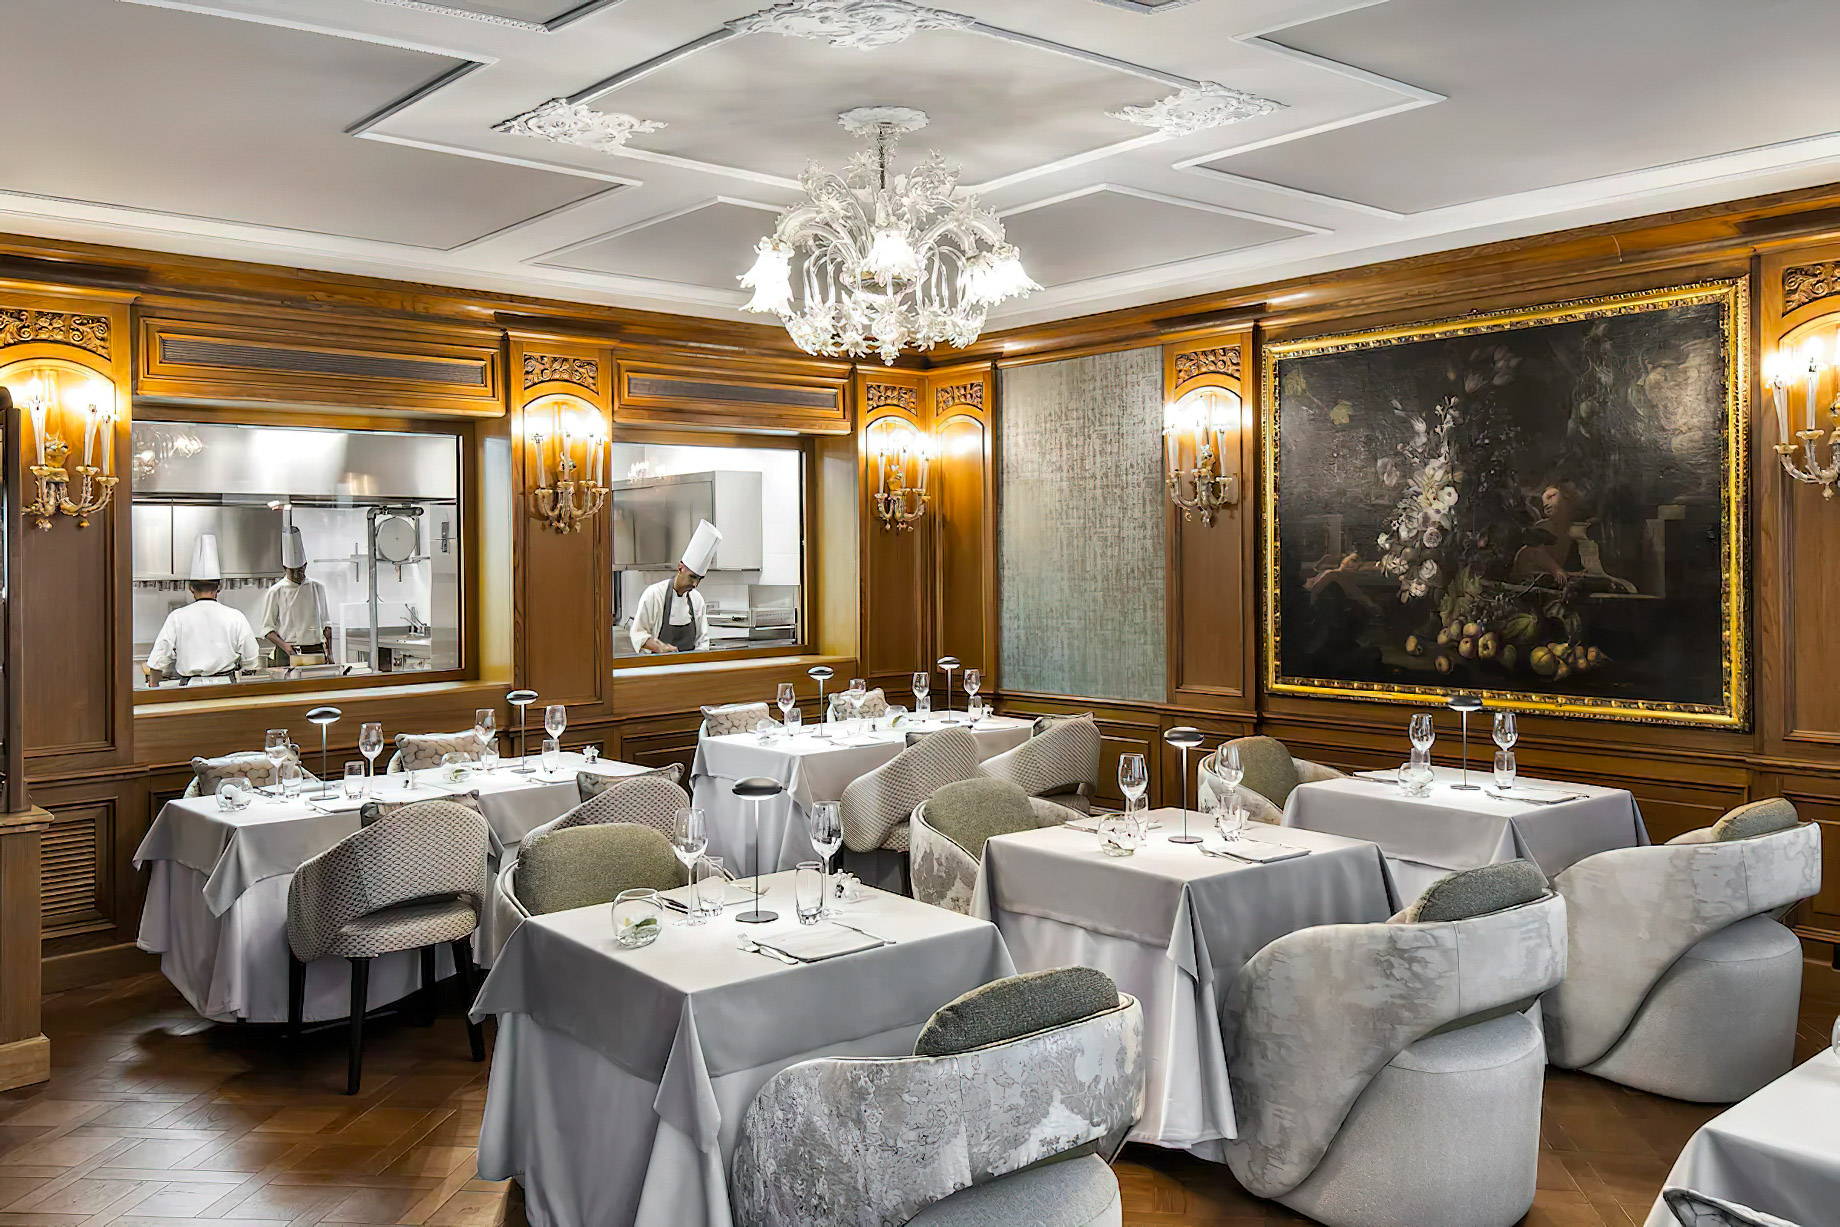 Baglioni Hotel Luna, Venezia – Venice, Italy – Canova Restaurant